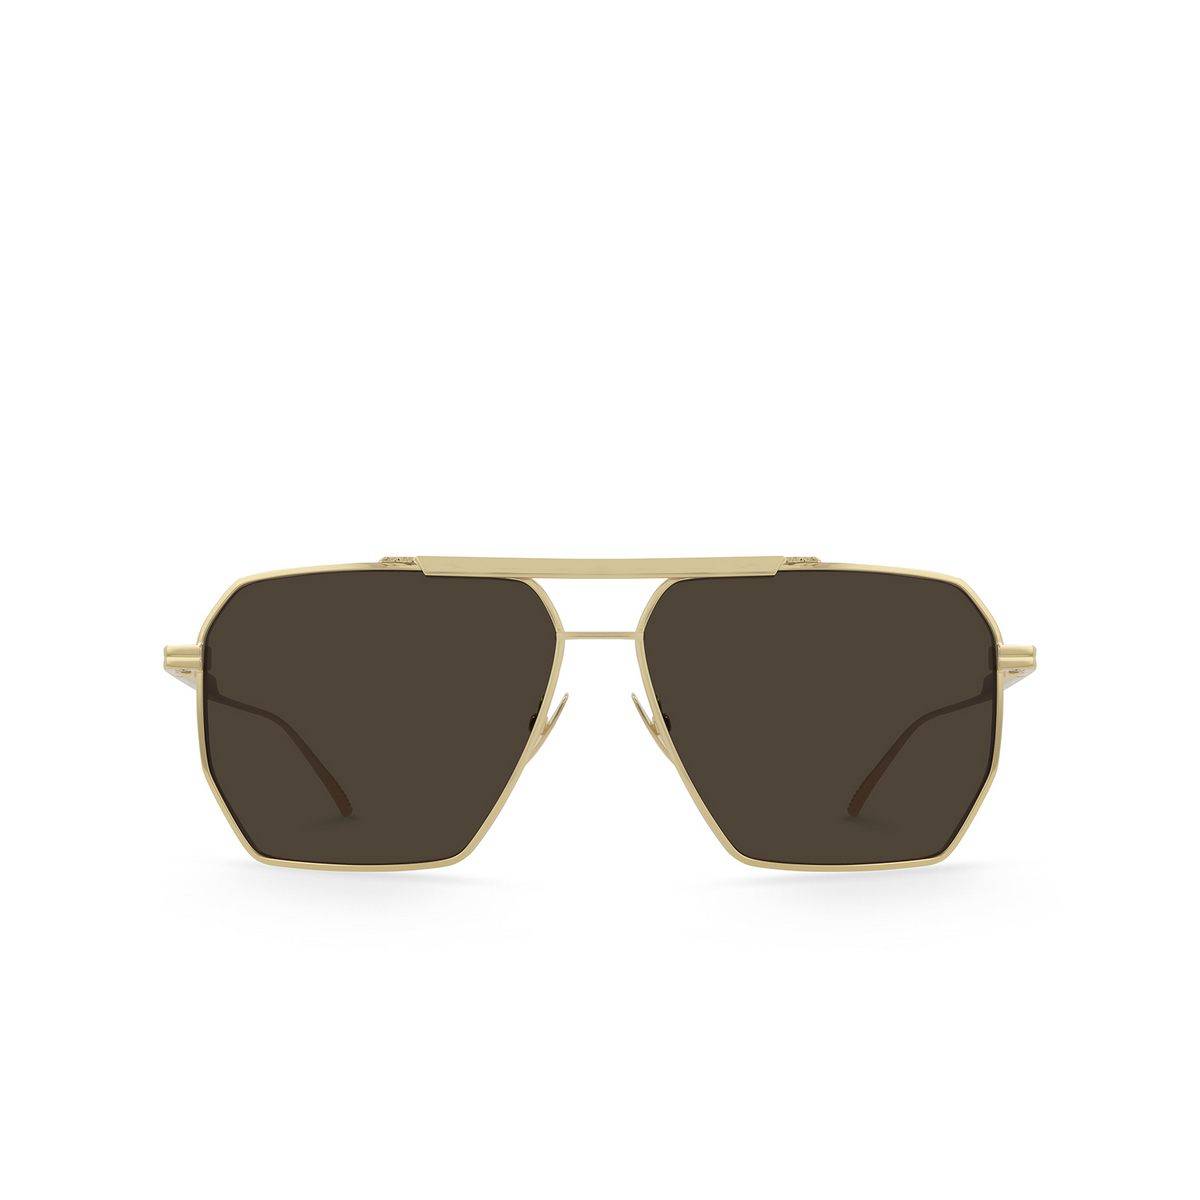 Bottega Veneta® Irregular Sunglasses: BV1012S color Gold 003 - front view.